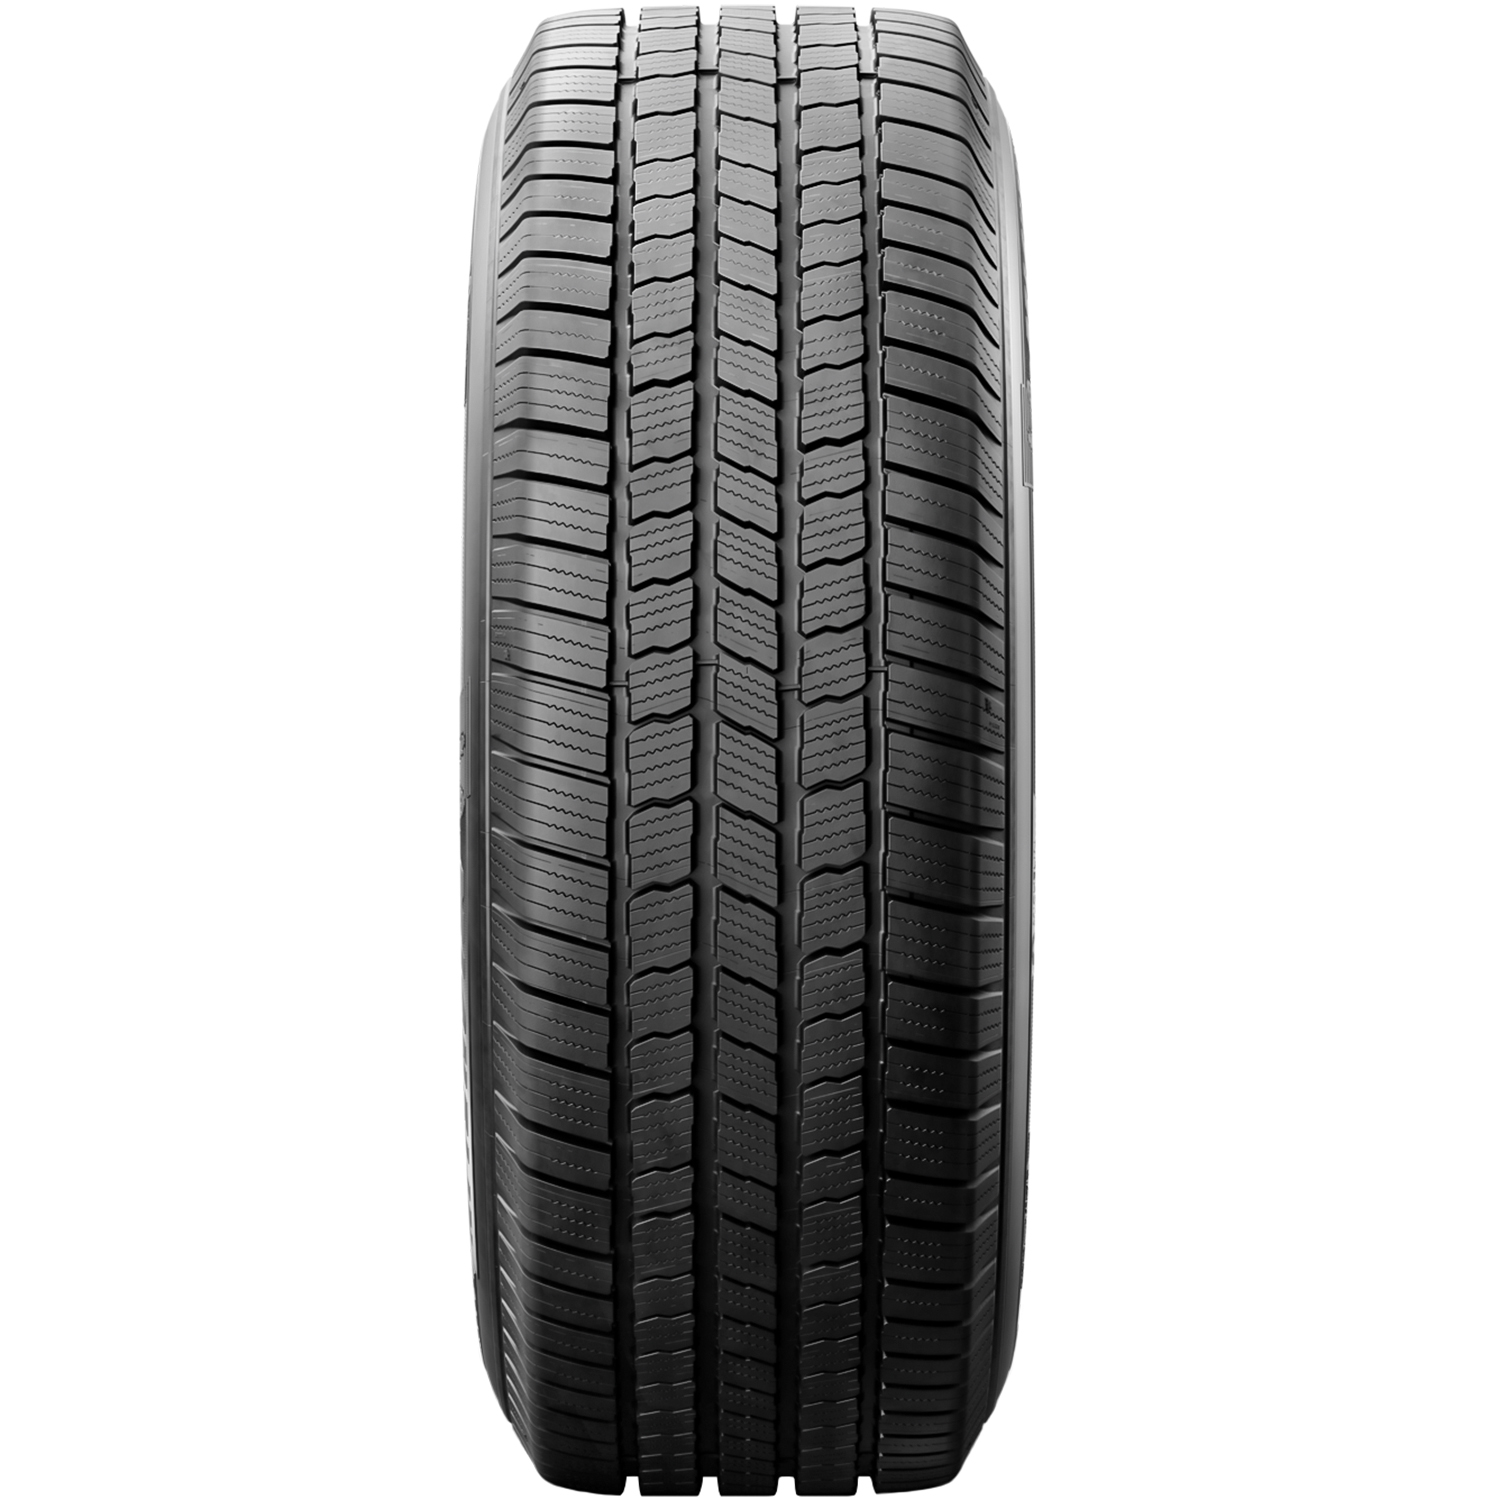 Michelin Defender LTX M/S All Season 245/60R20 107H Light Truck Tire - image 4 of 22